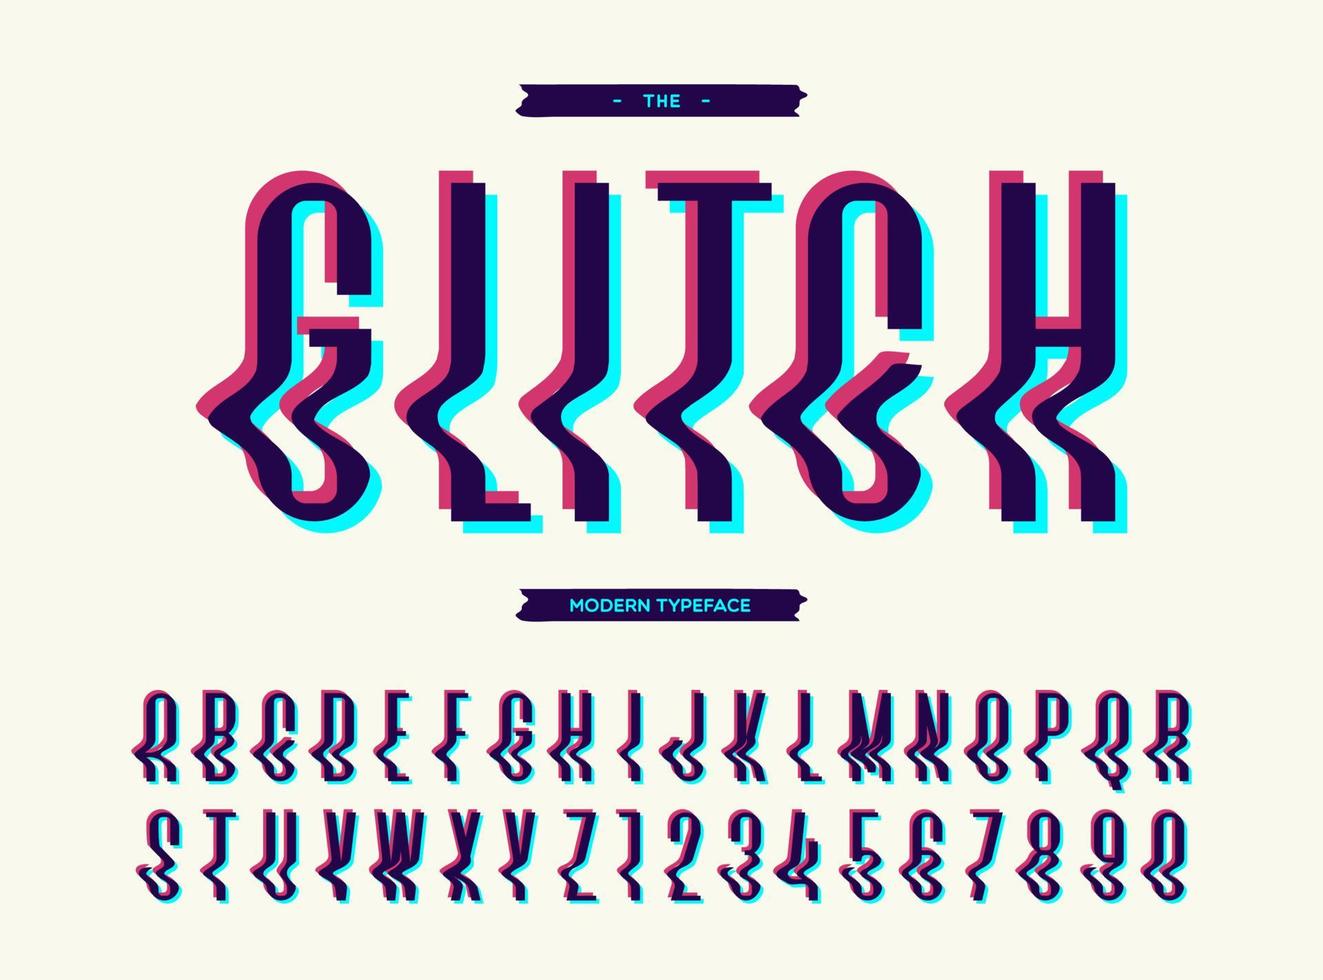 Glitch modern typeface sans serif font vector